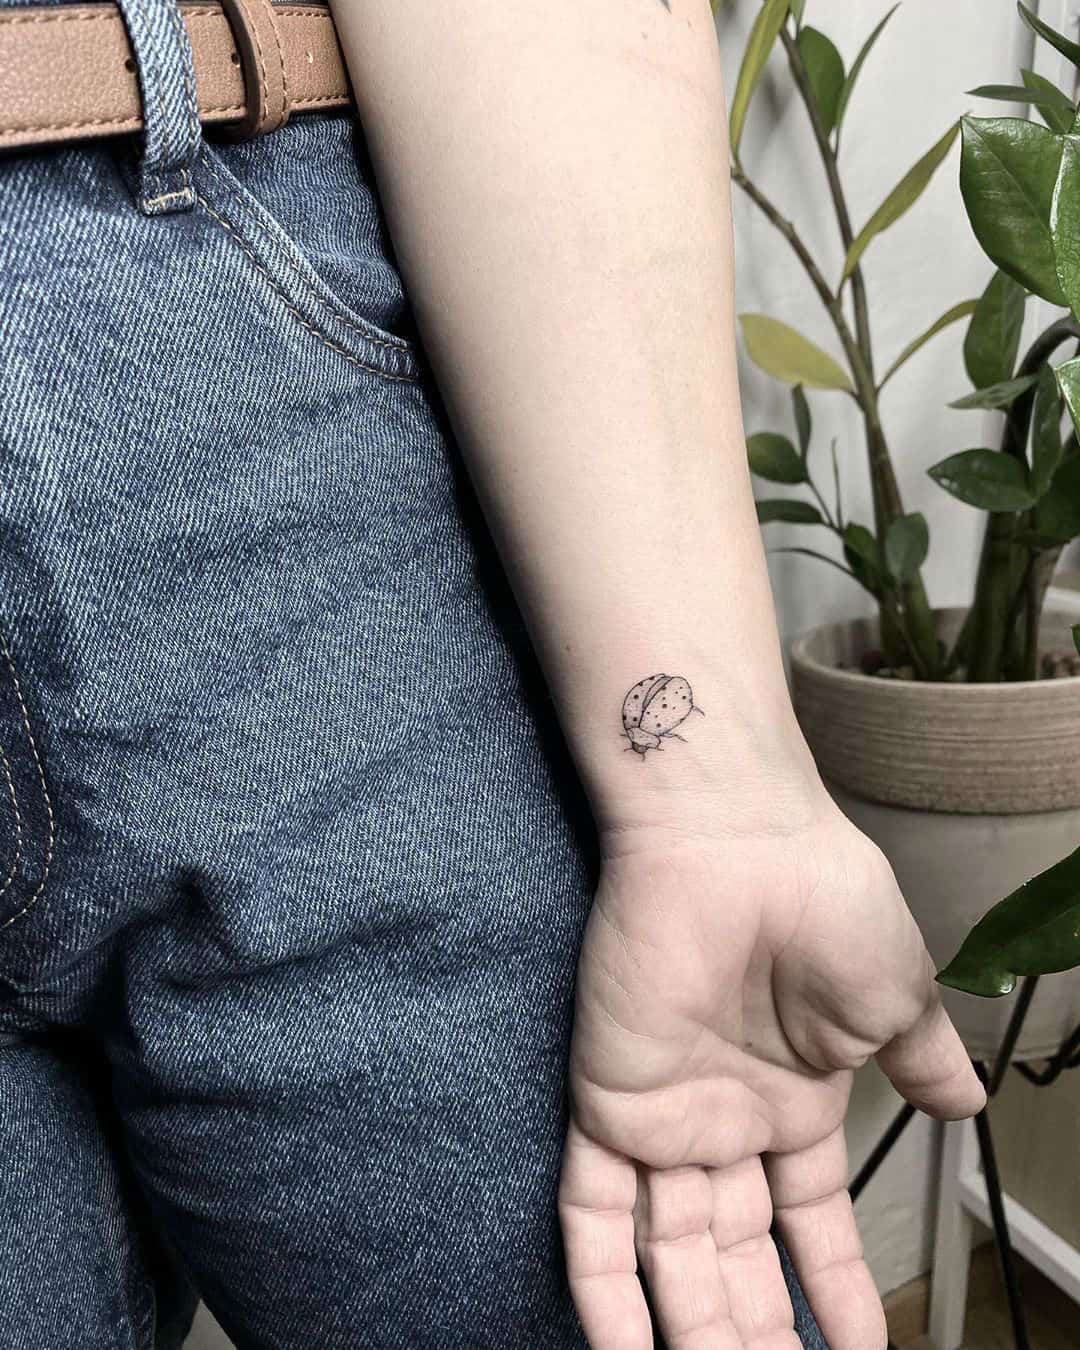 30 Best Ladybug Tattoo Design Ideas  The Paws